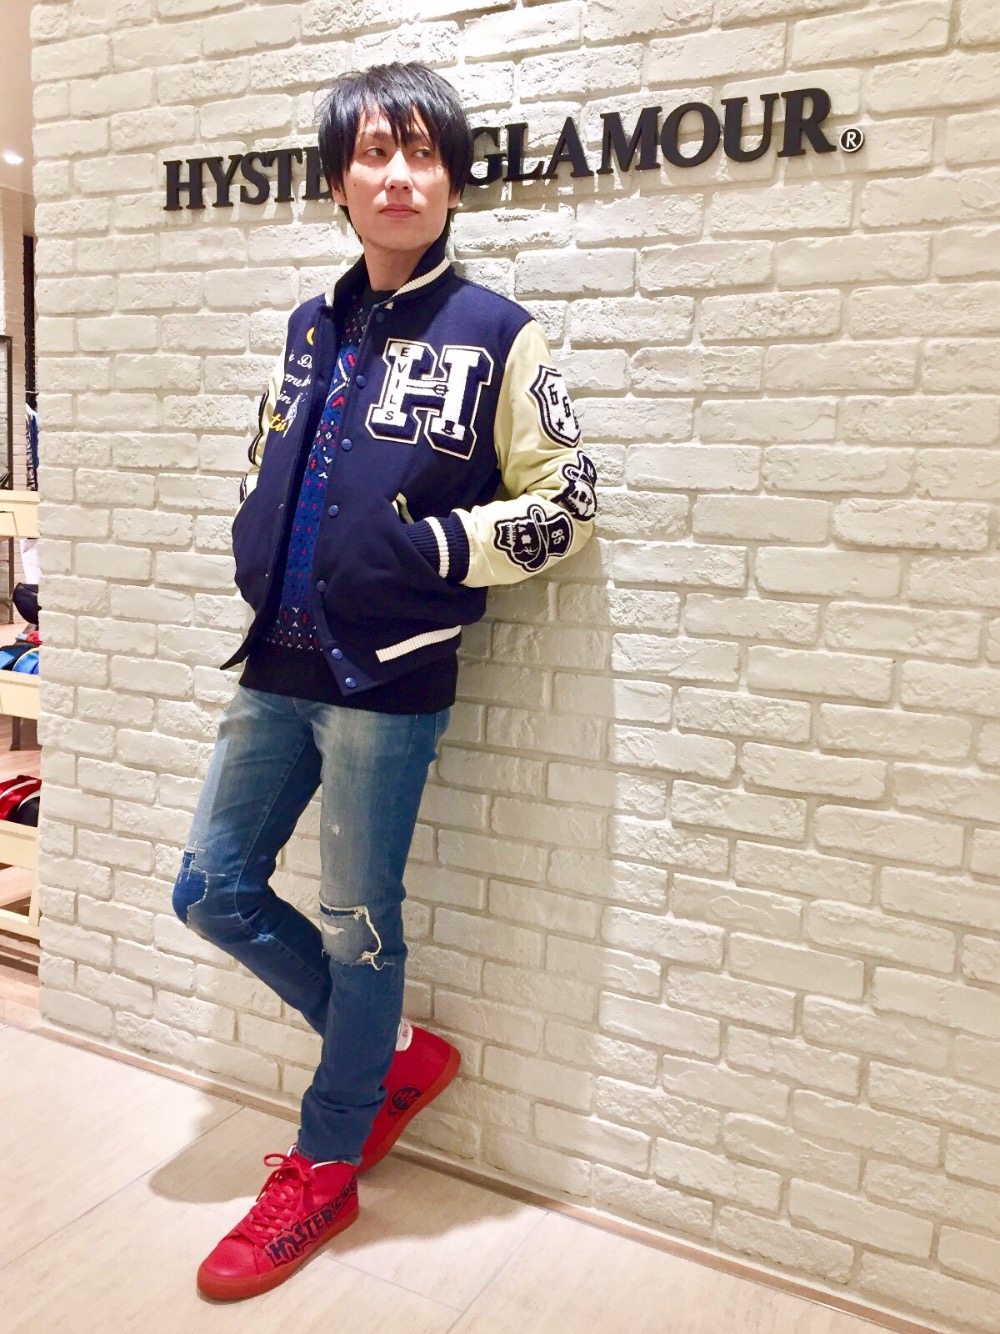 HYSTERIC GLAMOURタカシマヤゲートタワーモール店RYU / HYSTERIC ...